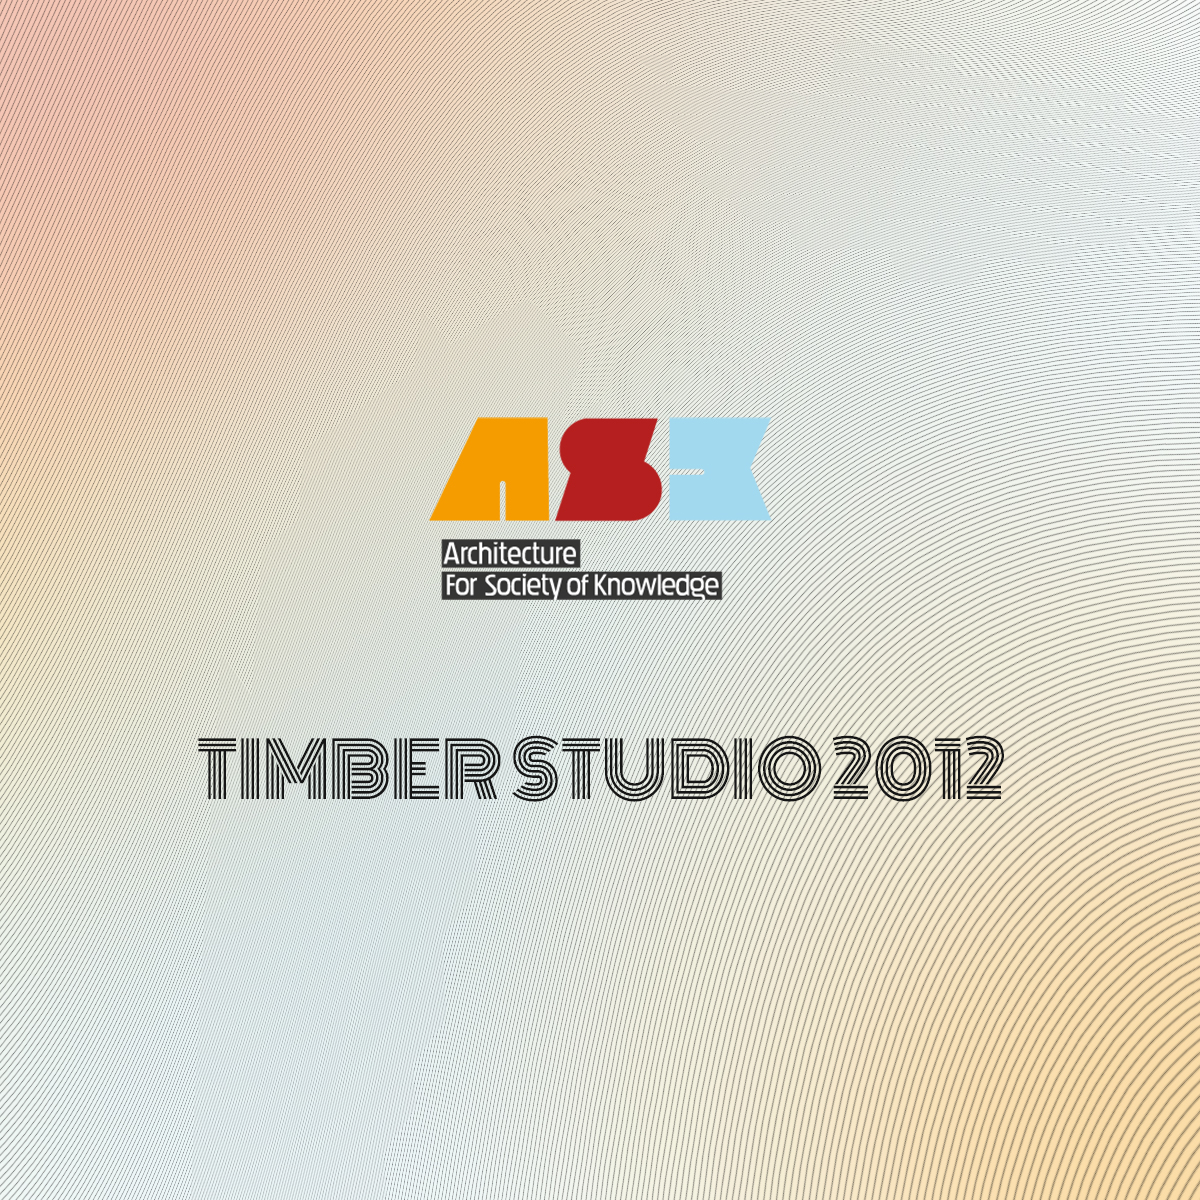 Timber Studio 2012